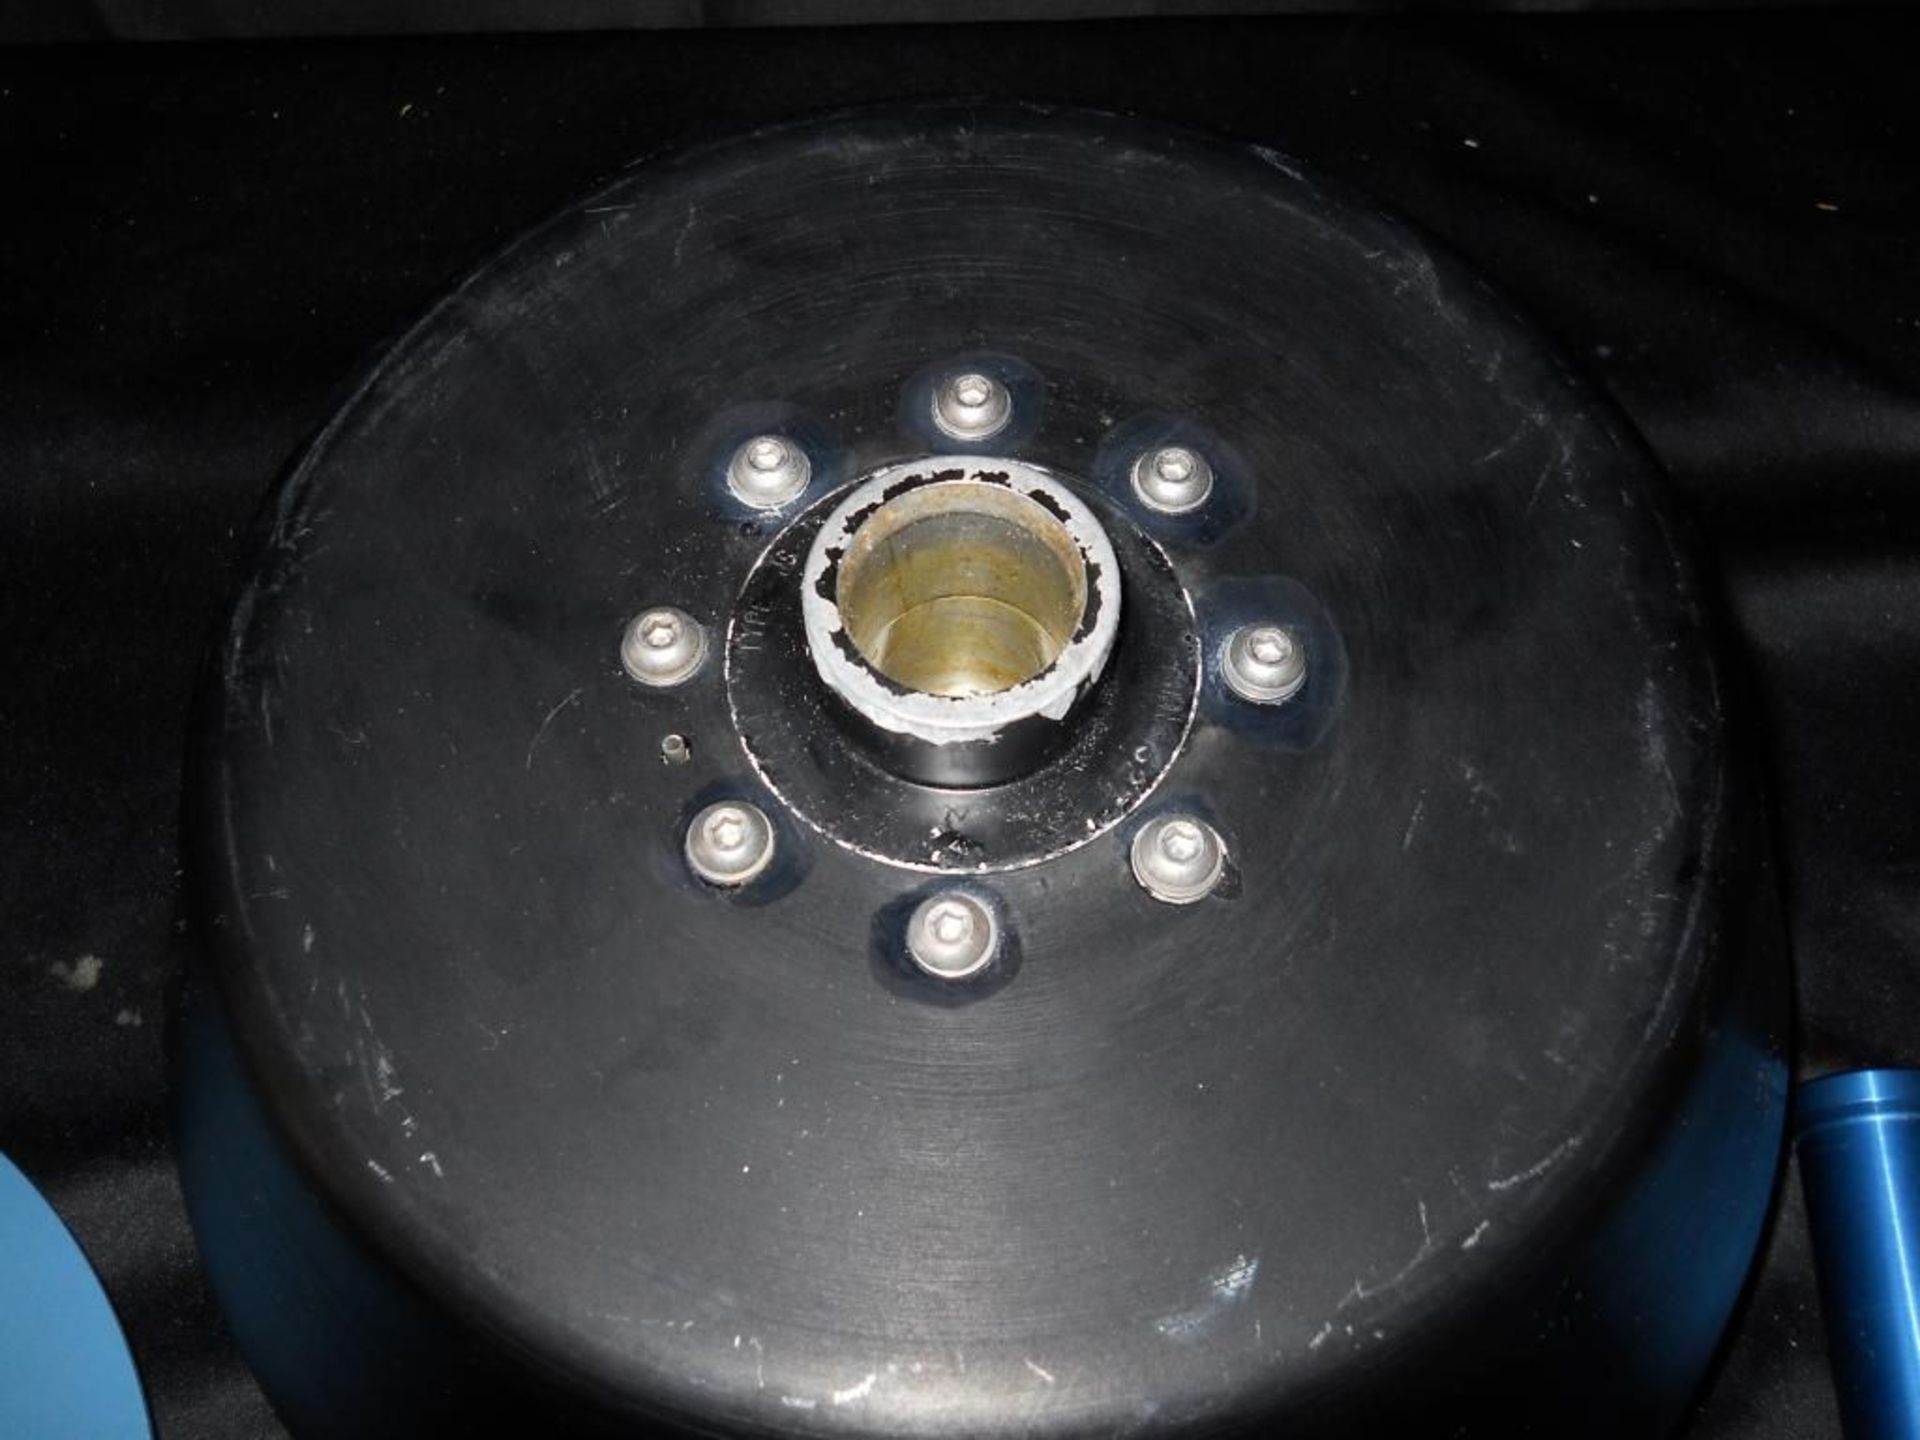 Beckman JS 13.1 Aluminum Swing Bucket Rotor w/ 6 50mL Tubes & Lid, Qty 1, 321076289708 - Image 6 of 7